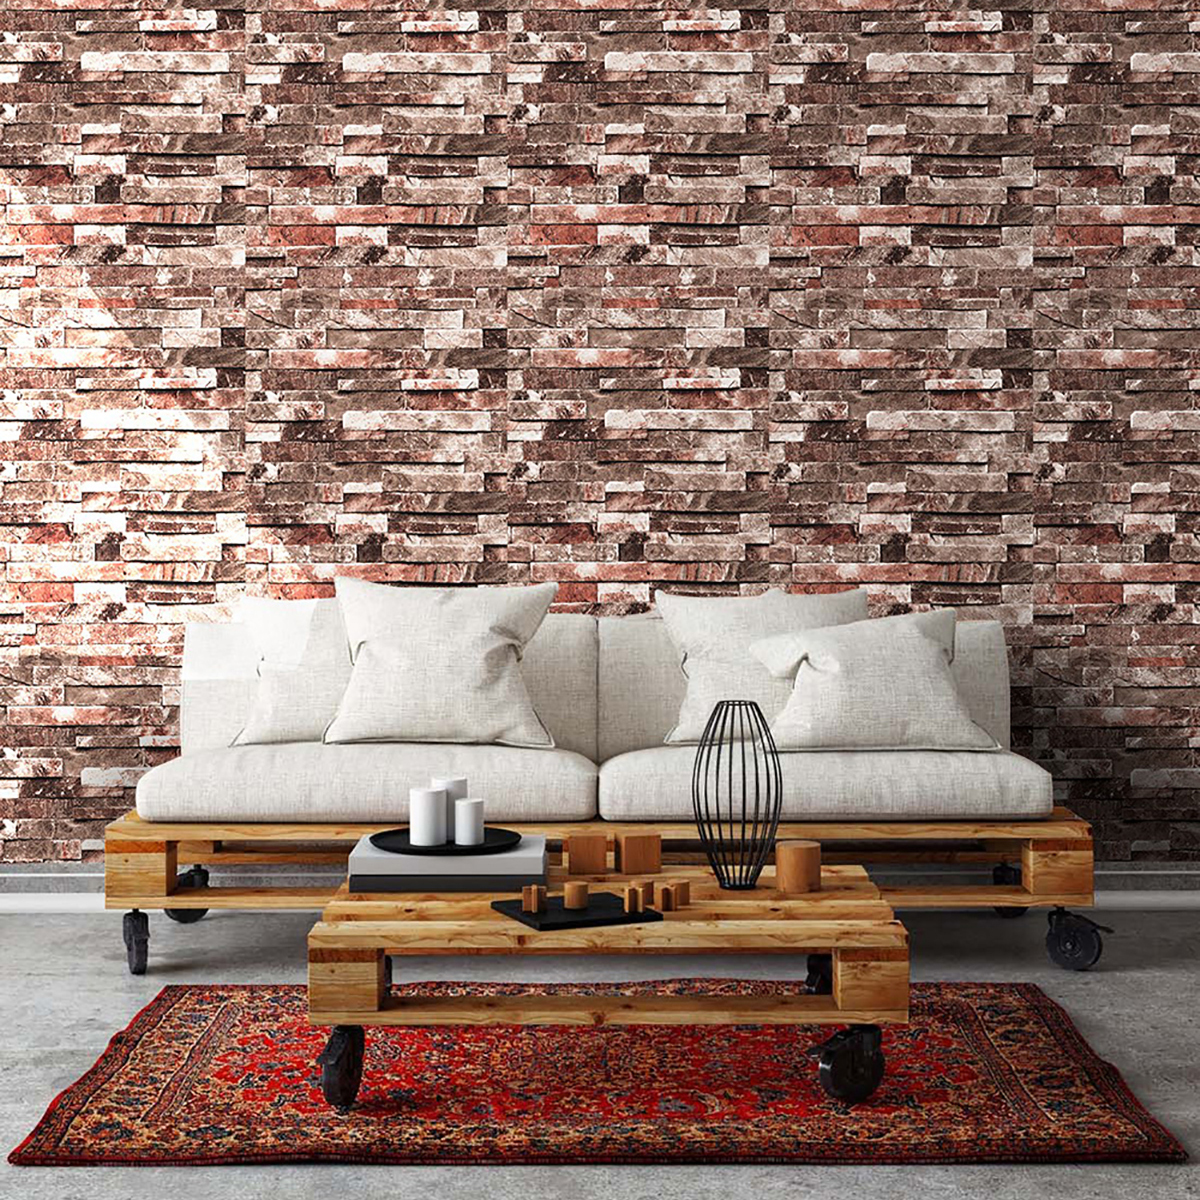 06x10M-Brick-Wallpaper-Wall-Sticker-Waterproof-PVC-Self-Adhesive-For-Desk-Room-1813110-5